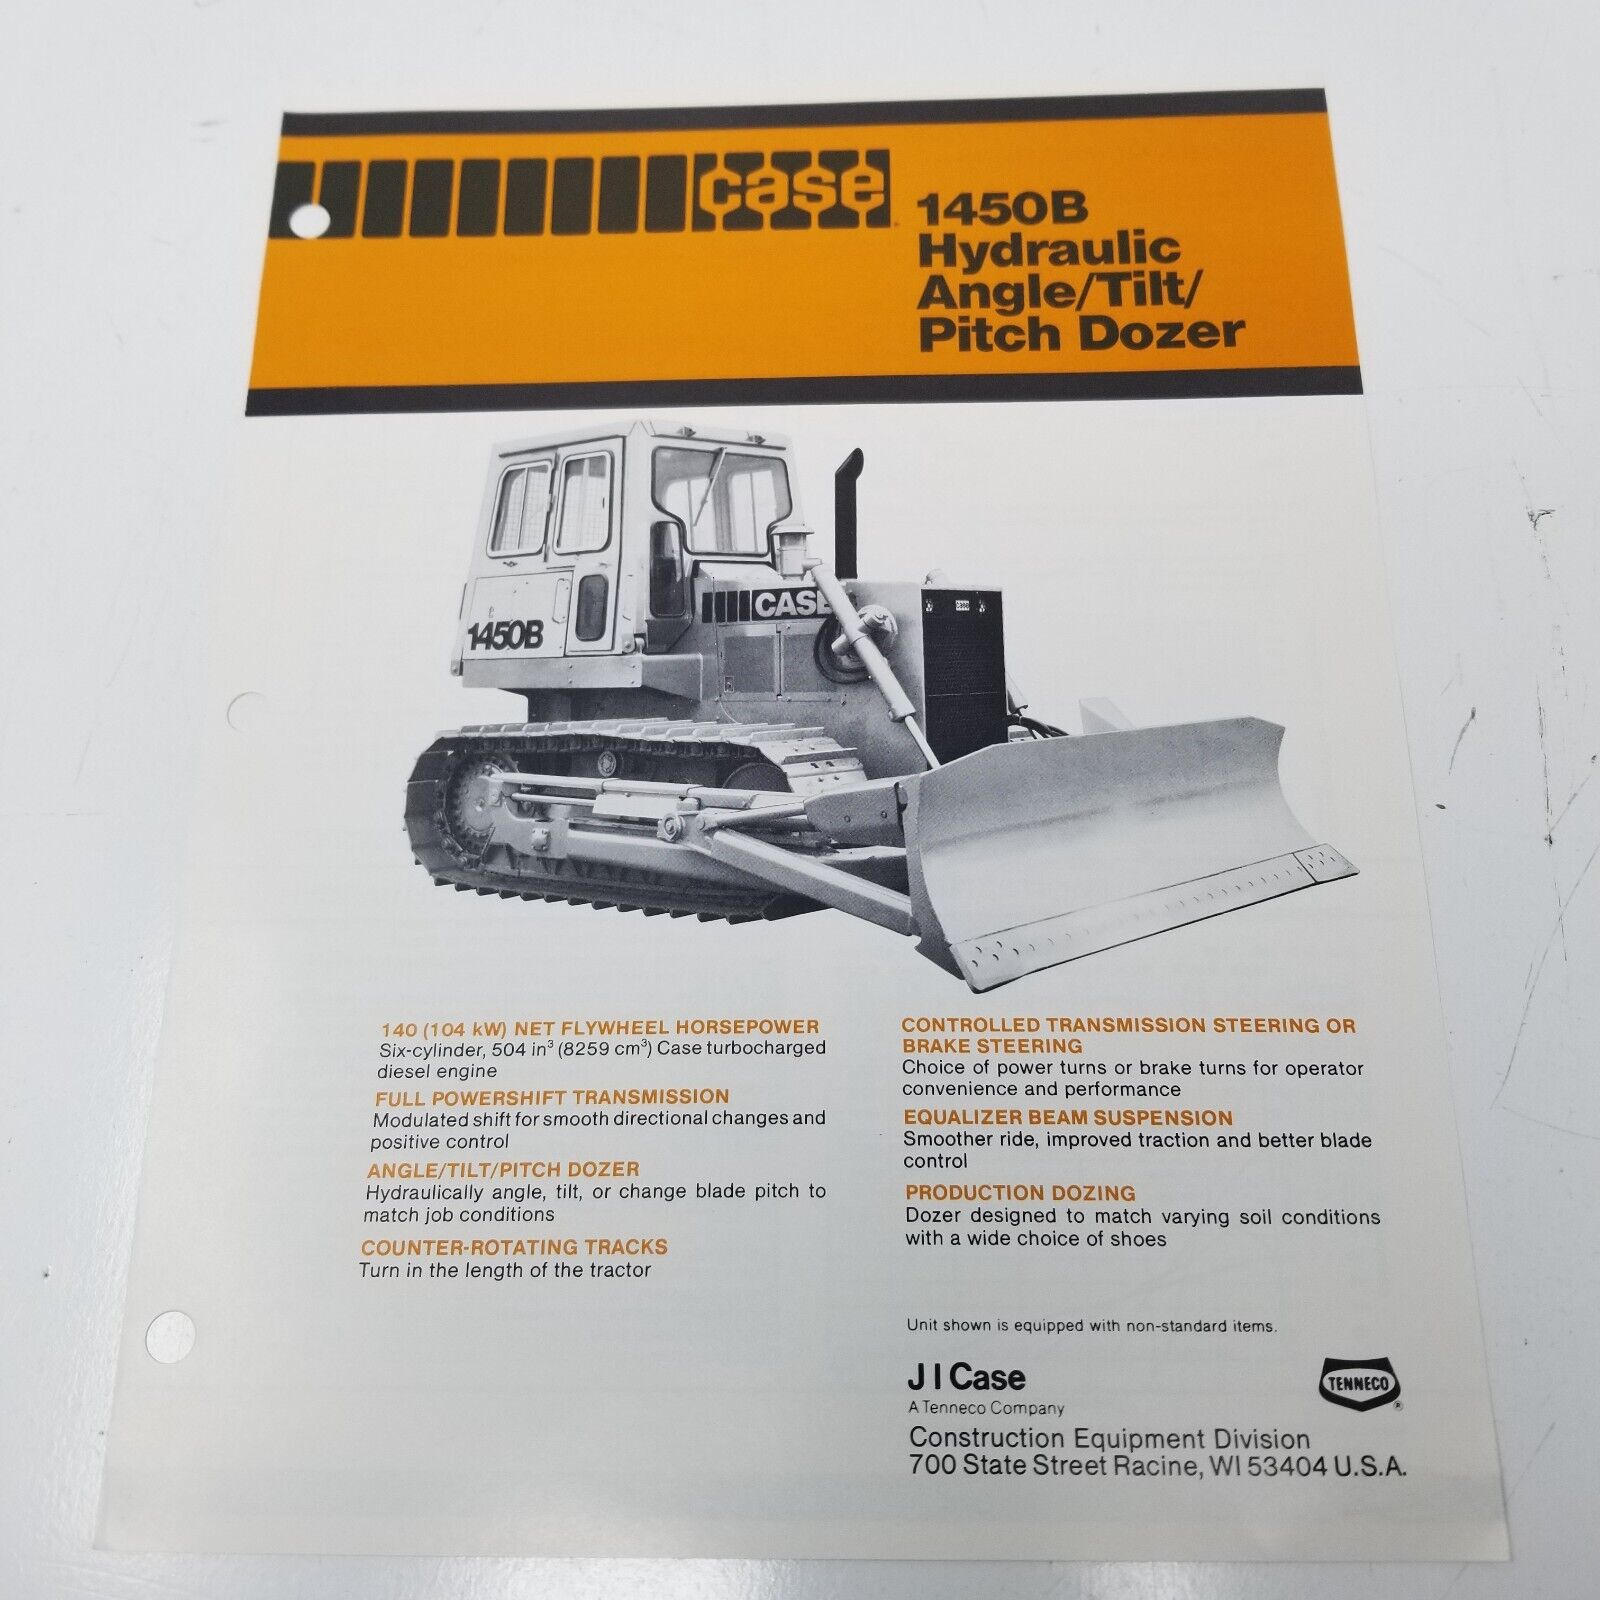 Case 1450B Hydraulic Angle Tilt Pitch Dozer Sales Brochure 1980 Specifications